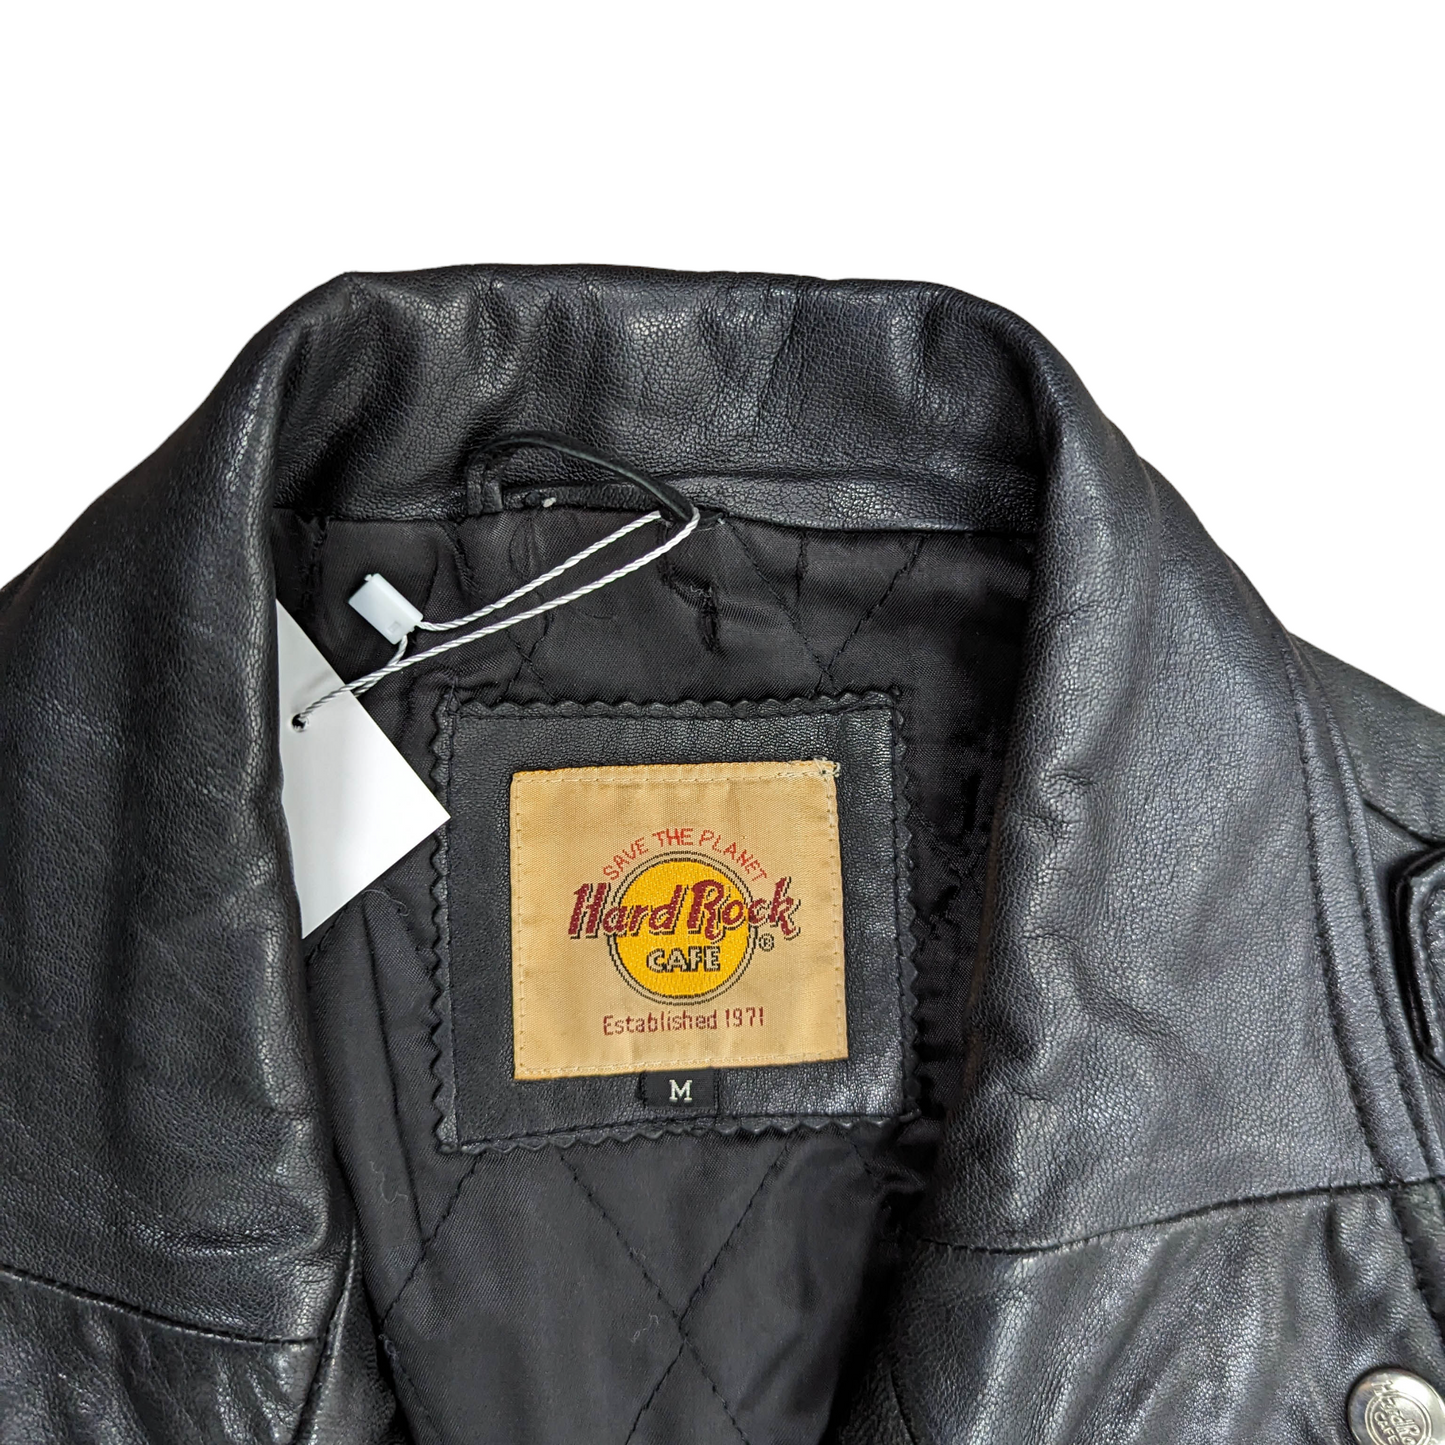 00s Hard Rock Cafe Berlin Leather Jacket Size M